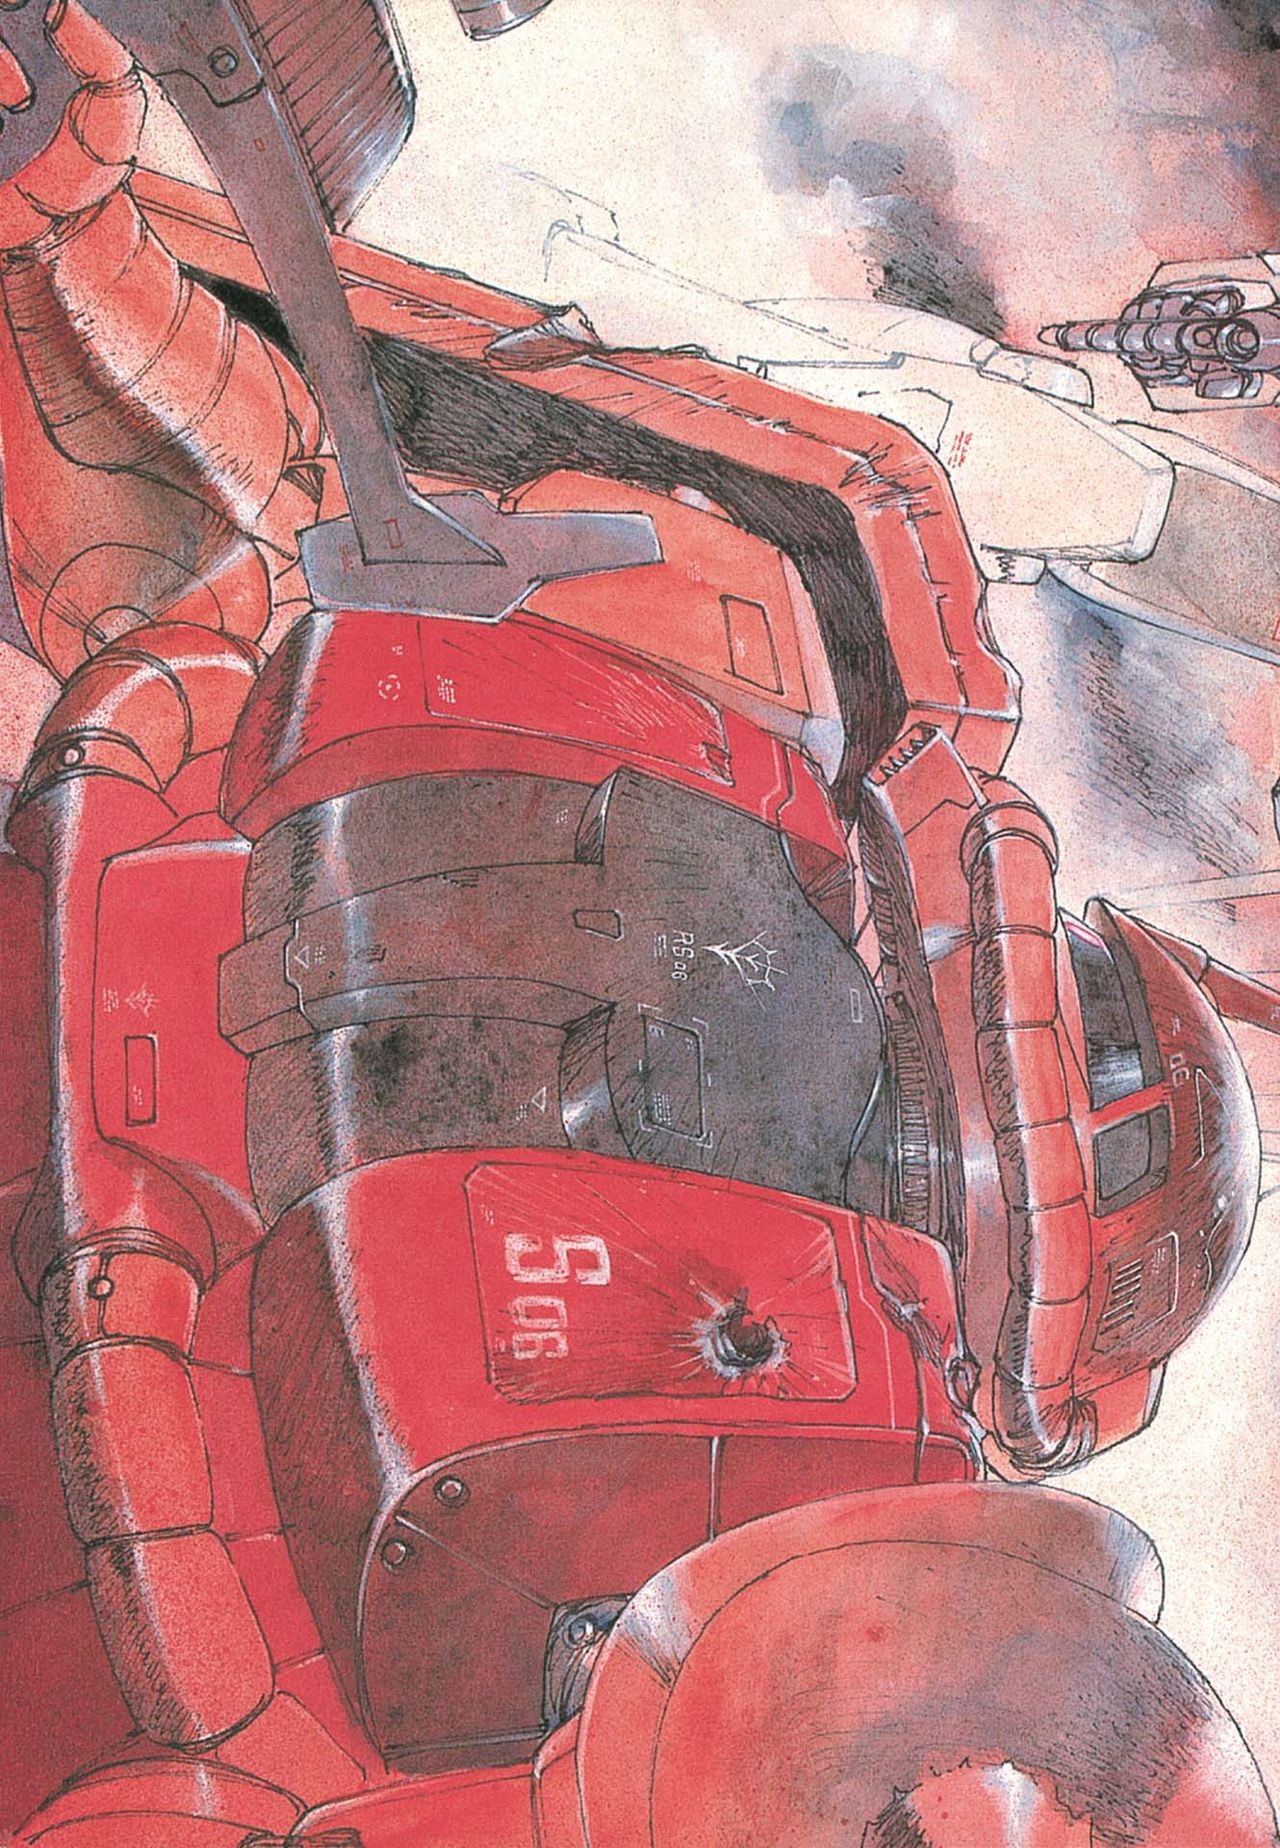 [Kazuhisa Kondo] Kazuhisa Kondo 2D & 3D Works - Go Ahead - From Mobile Suit Gundam to Original Mechanism 30